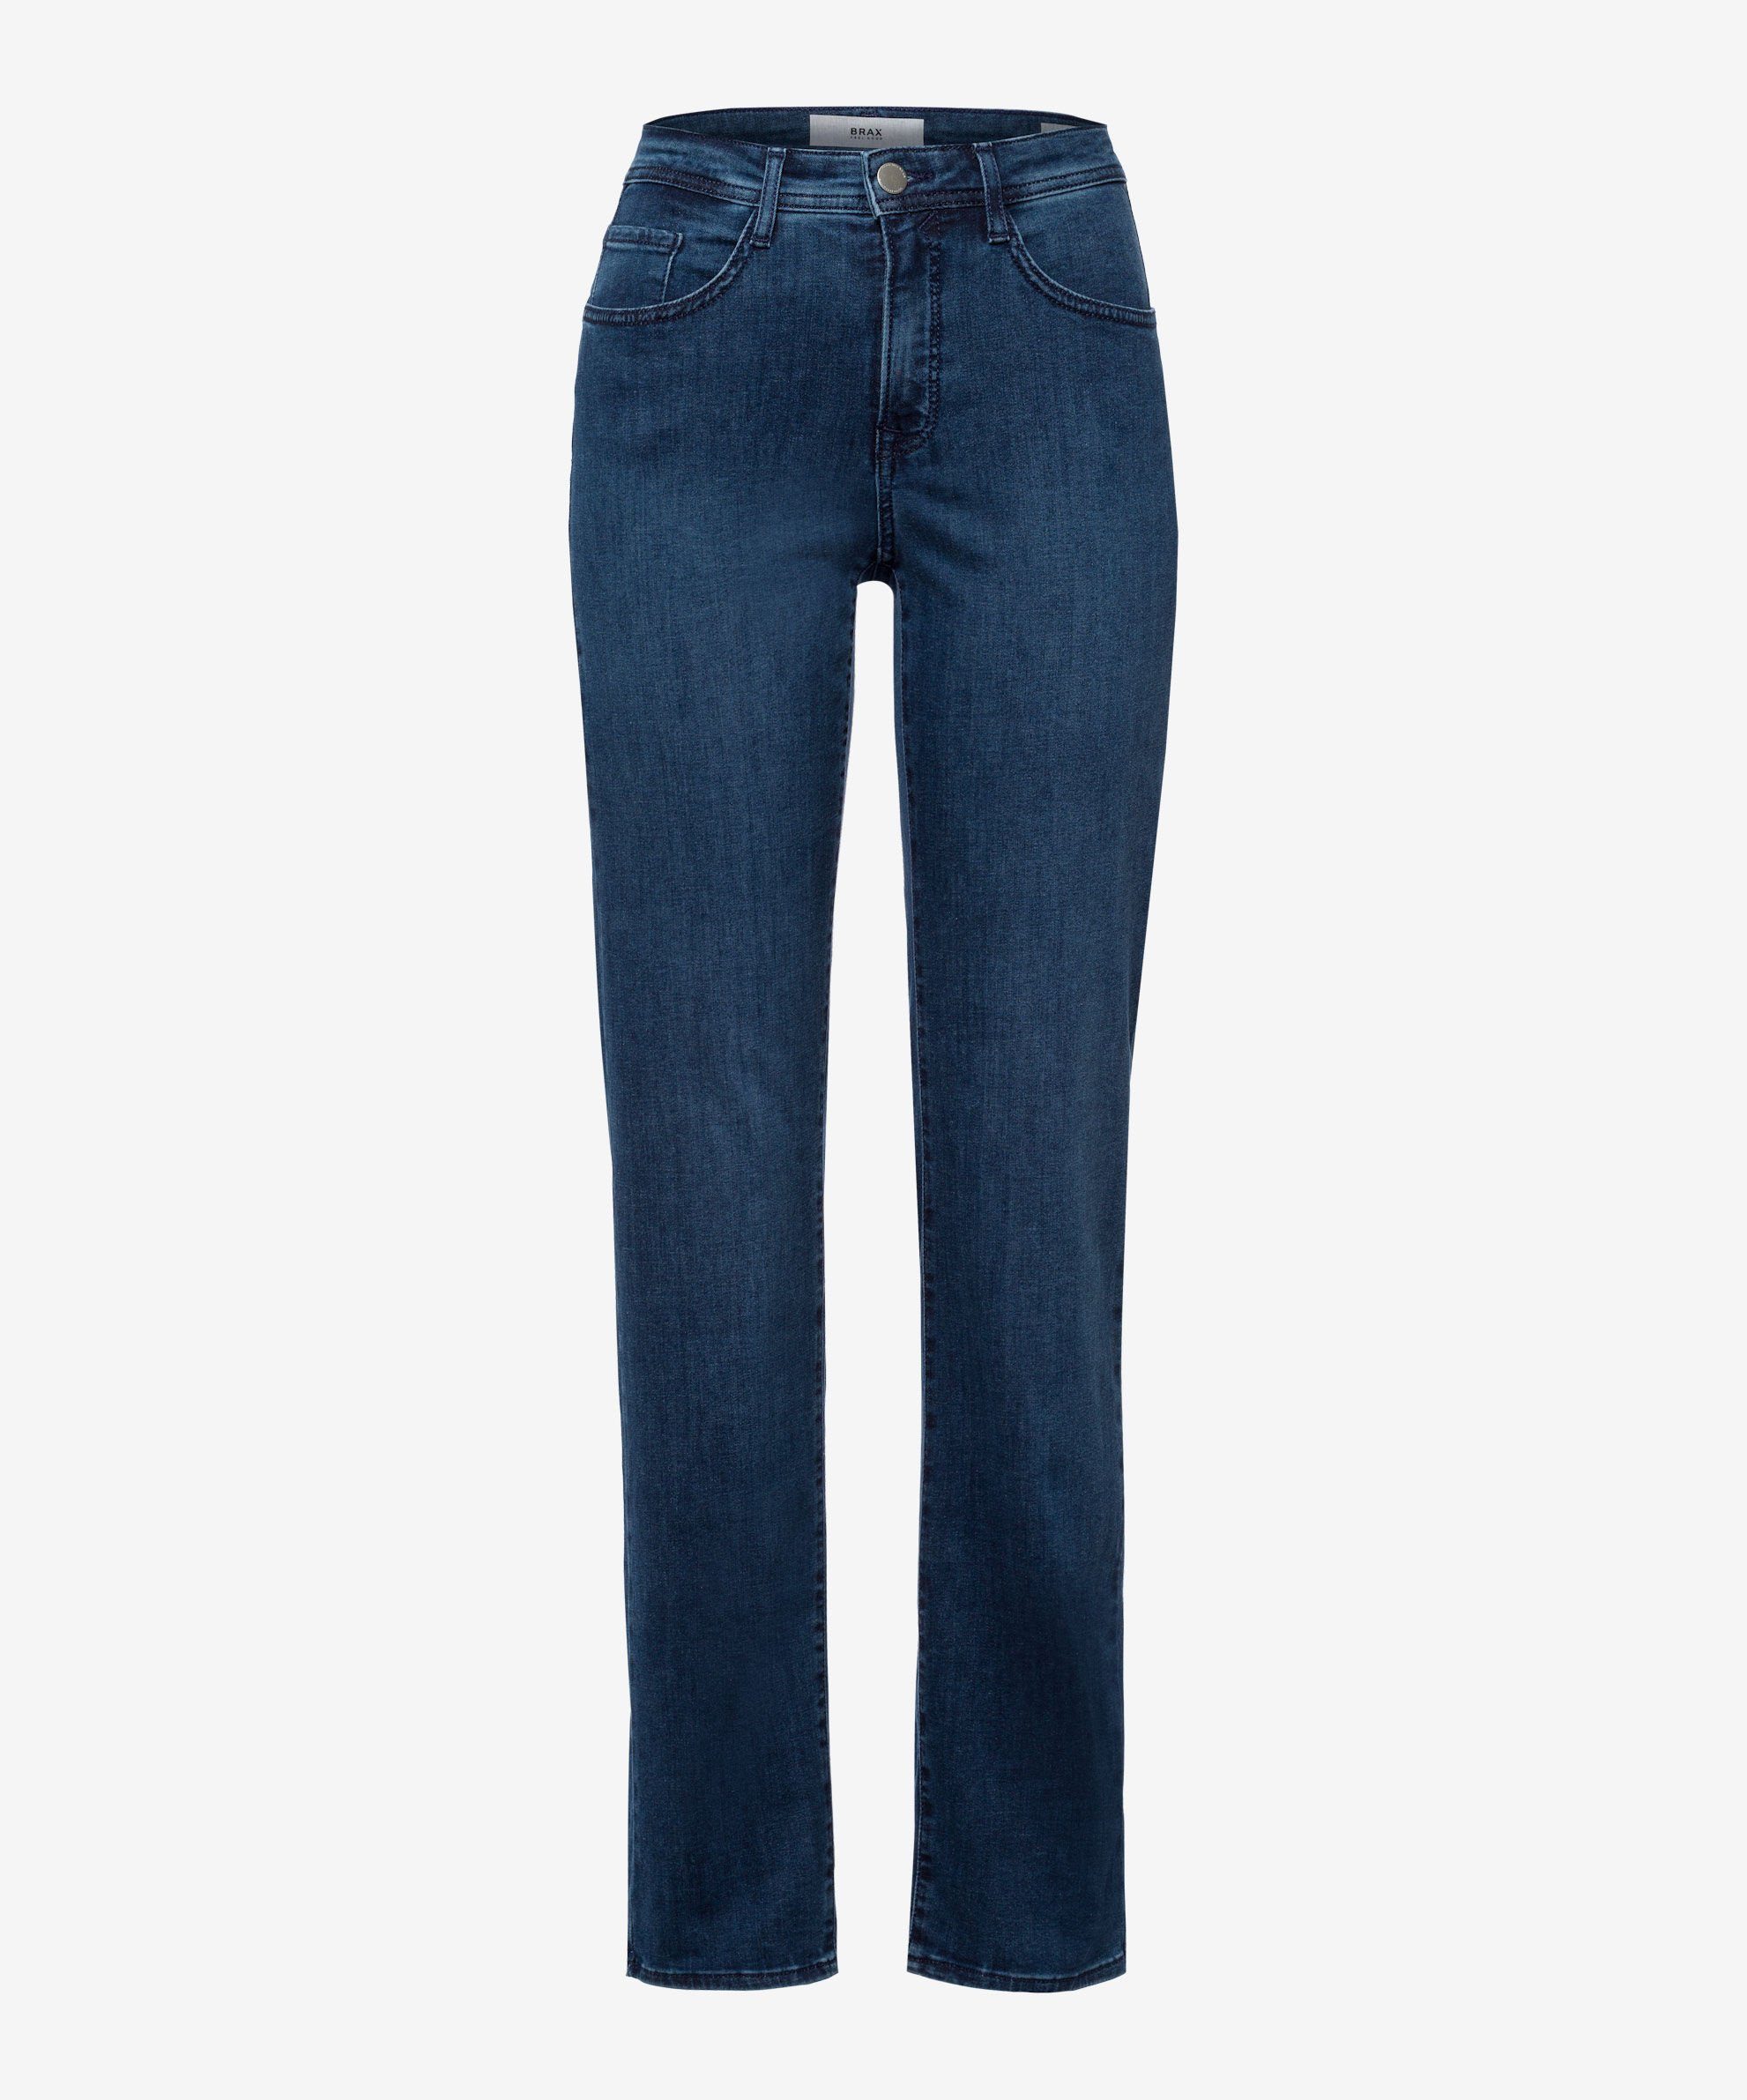 Brax 5-Pocket-Jeans Five-Pocket-Jeans in gepflegtem Style used regular blue